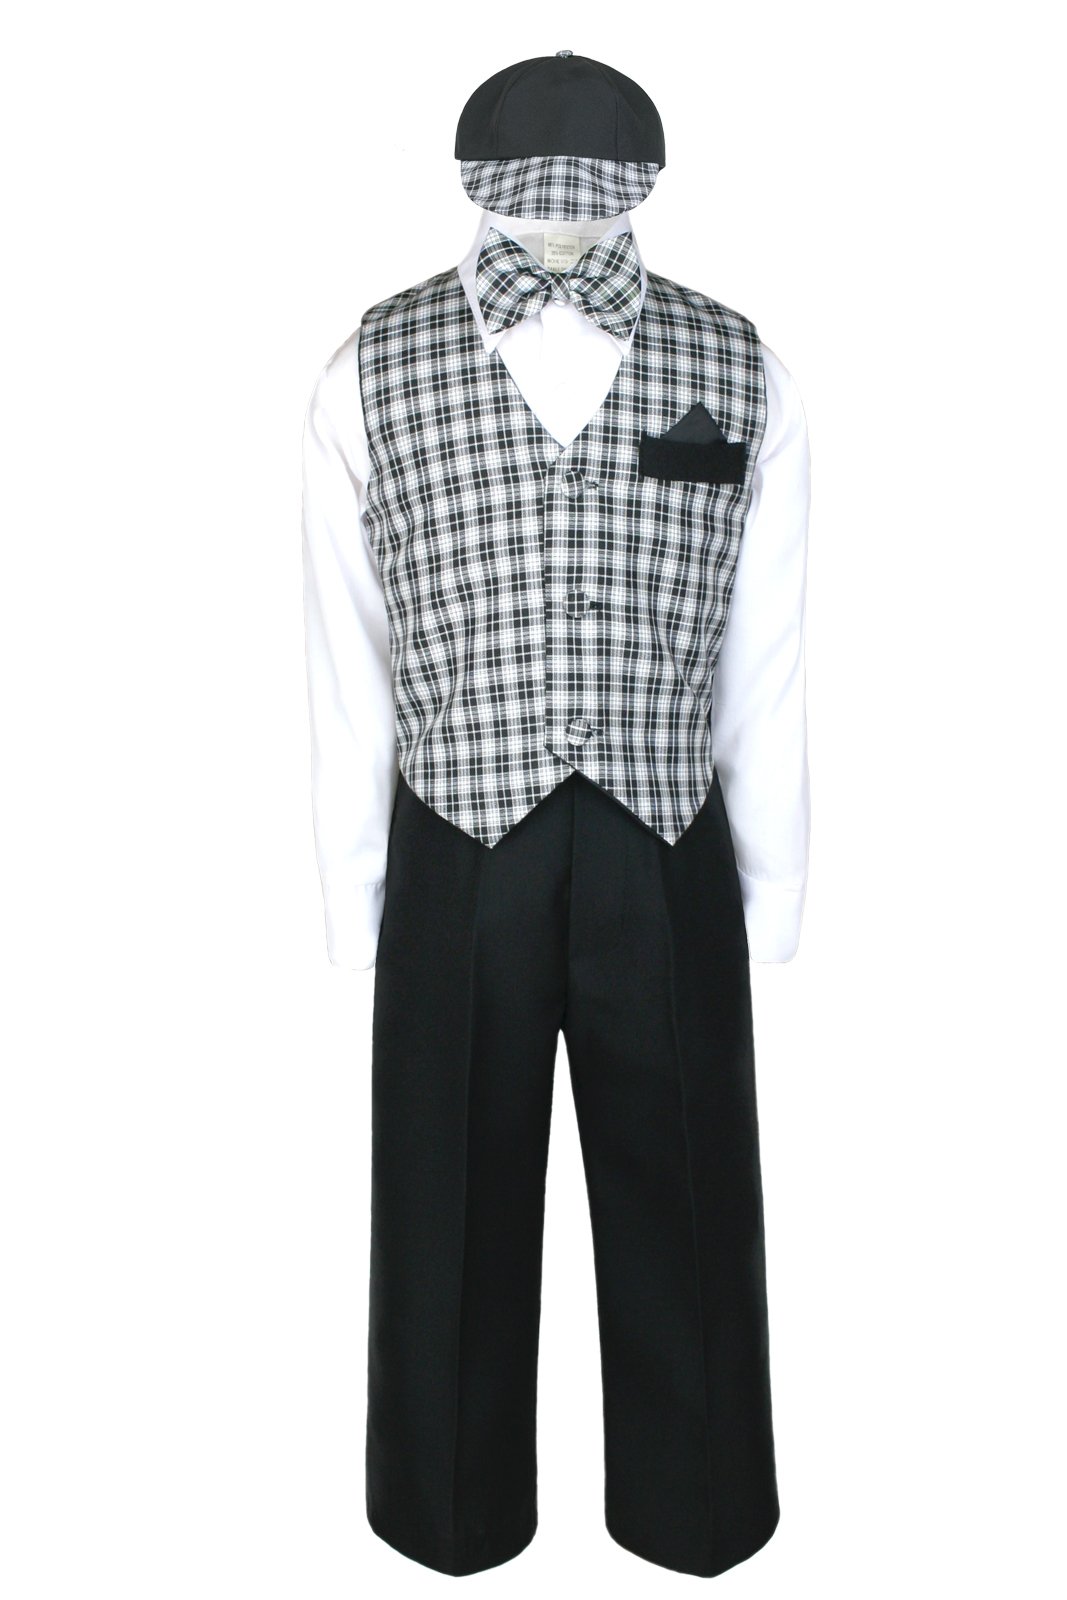 Unotux Baby Boy Formal Wedding Black Gingham Checks Vest Bow Suits Sets Hat S-XL